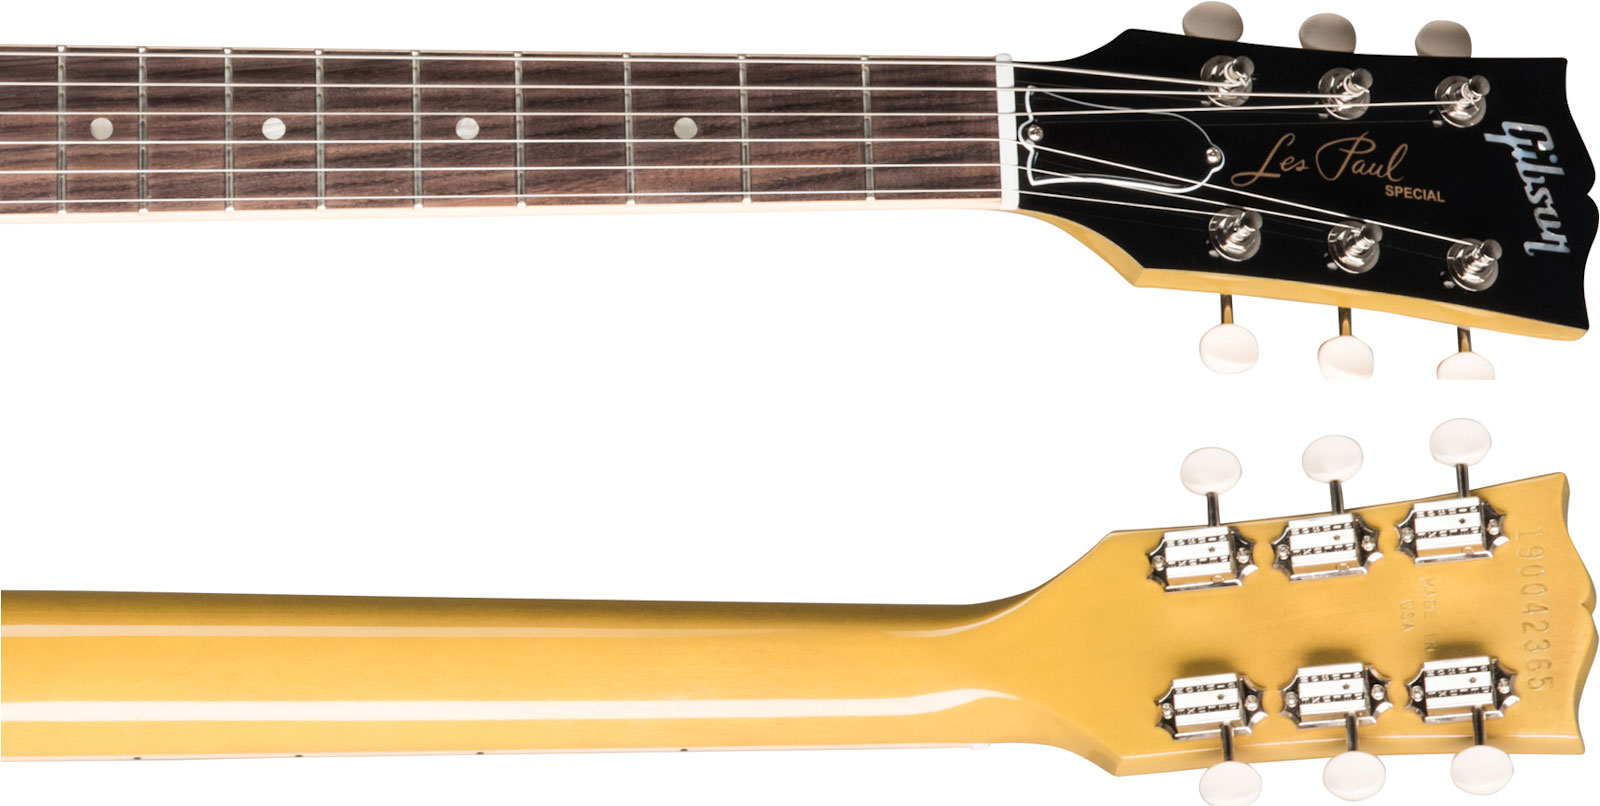 Gibson Les Paul Special Original 2p90 Ht Rw - Tv Yellow - Single cut electric guitar - Variation 3